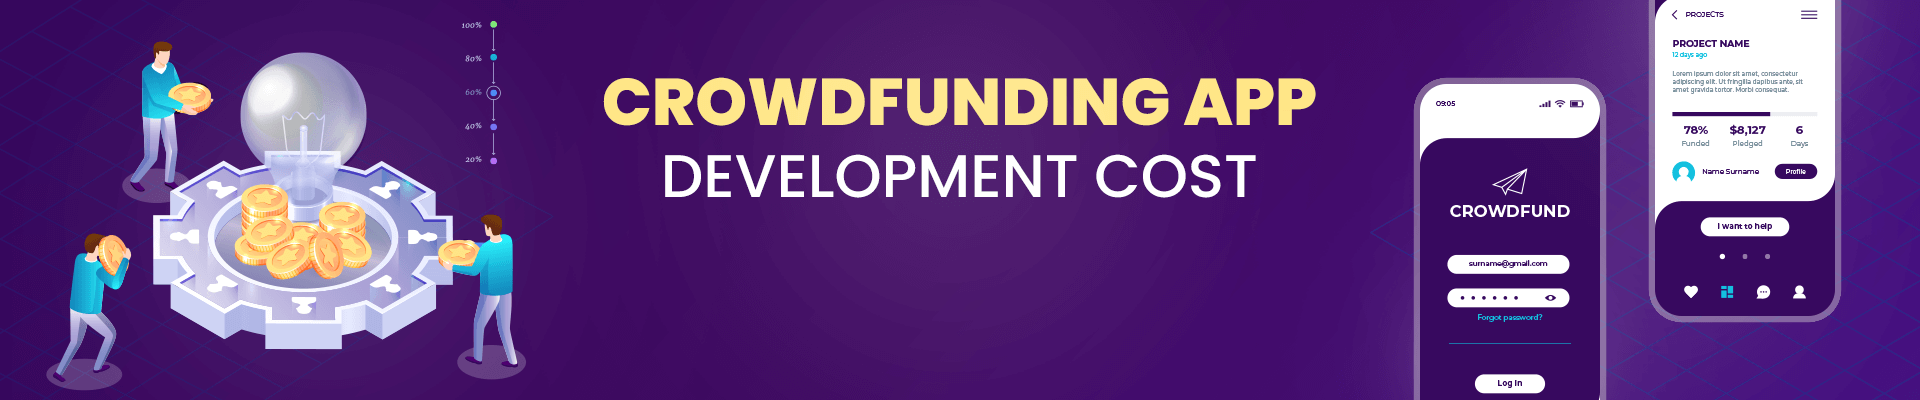 Crowdfunding Application Development Cost